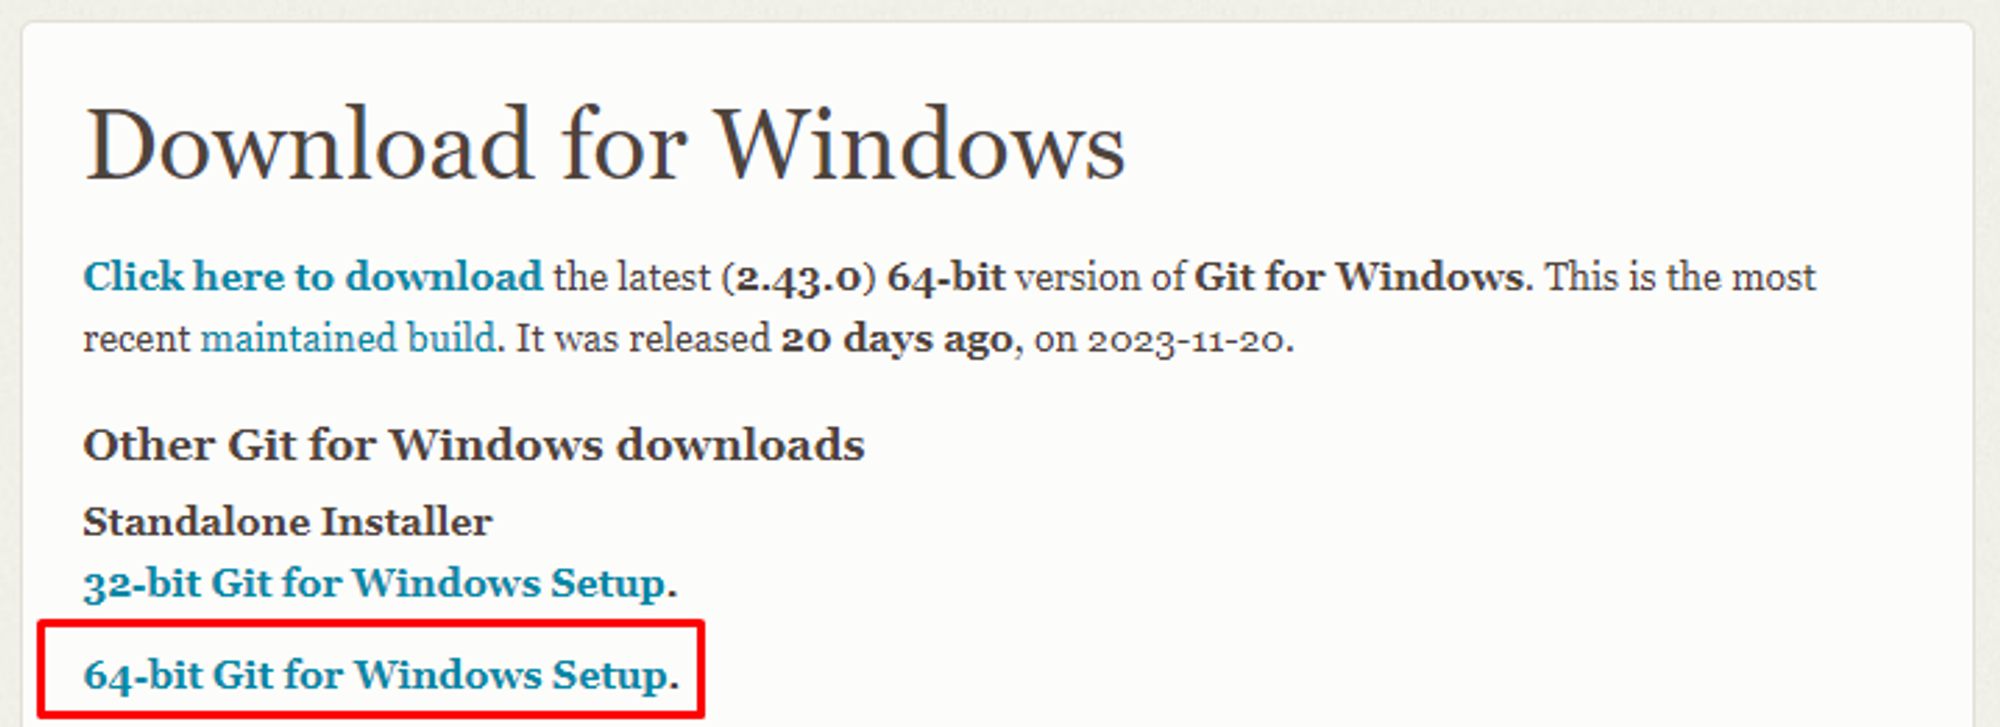 2-2. 64-bit Git for Windows Setup 를 클릭